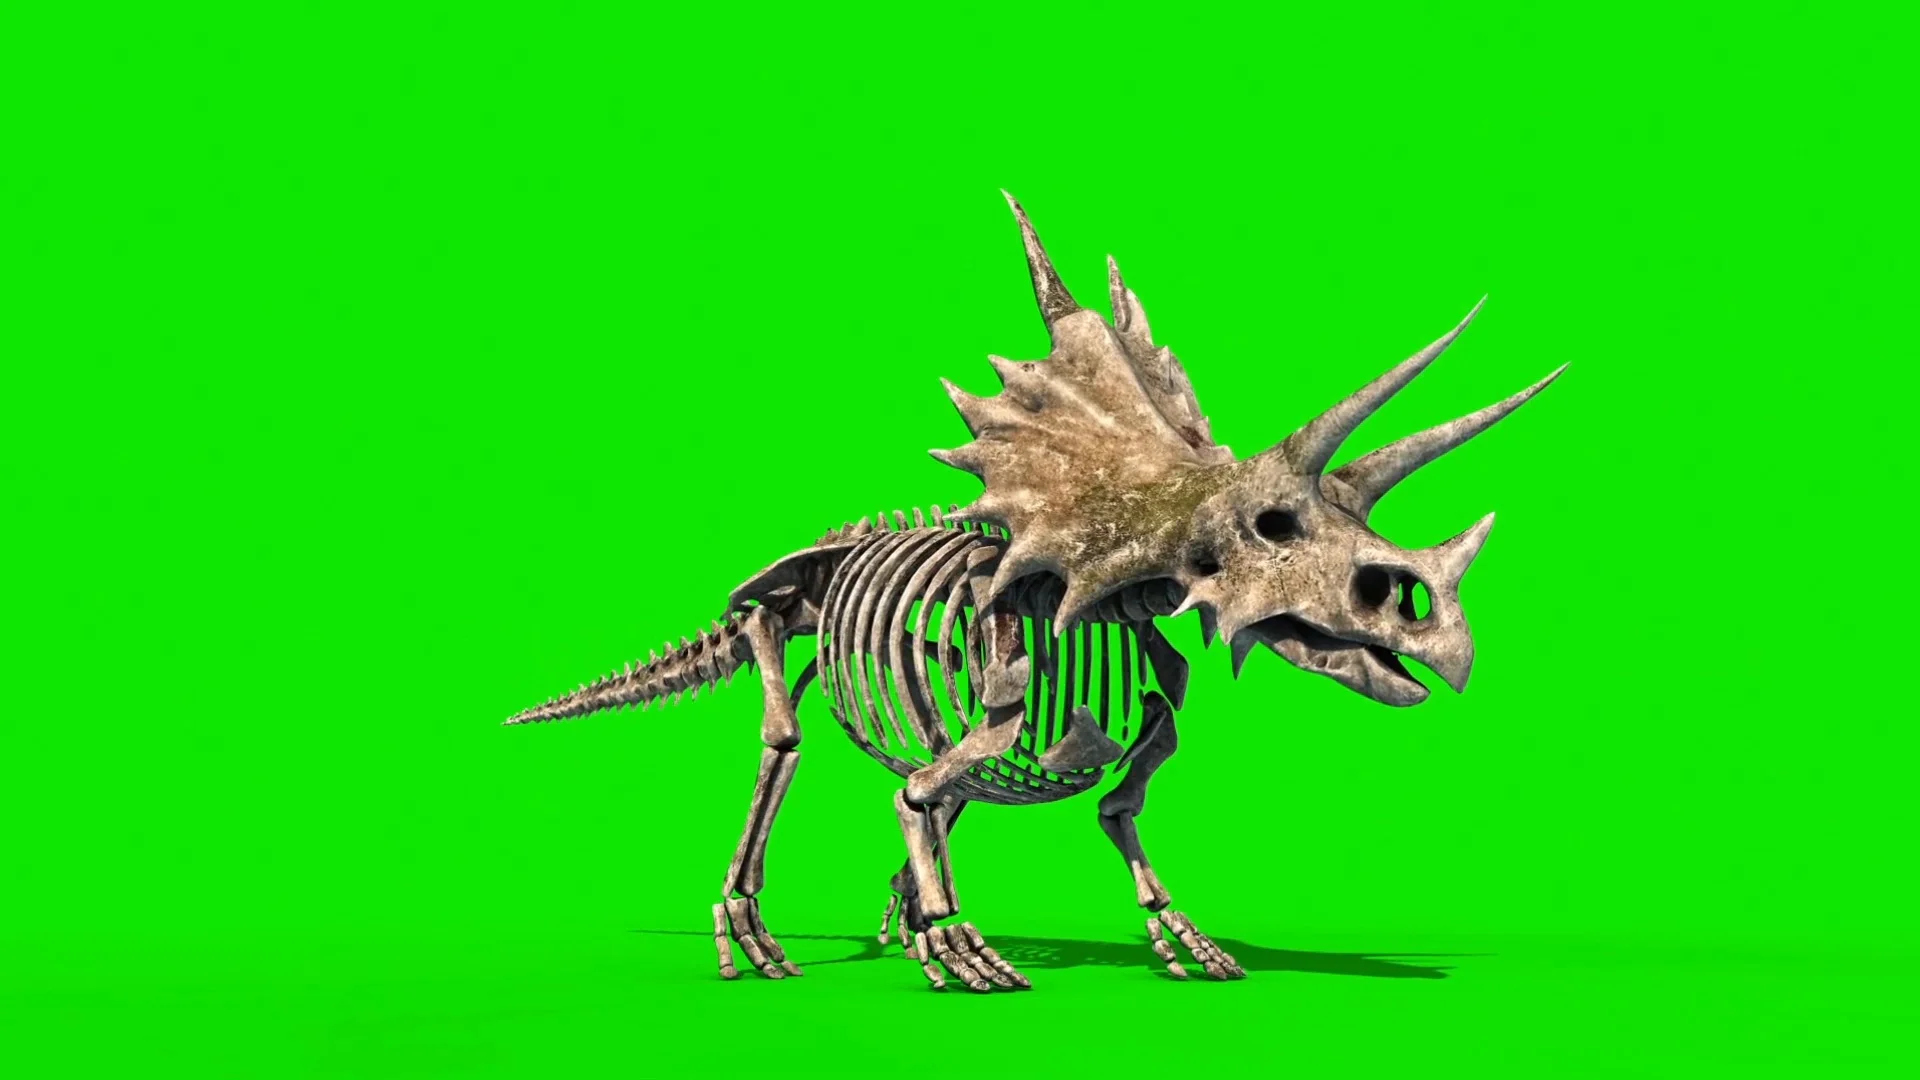 jurrasic park triceratops skull